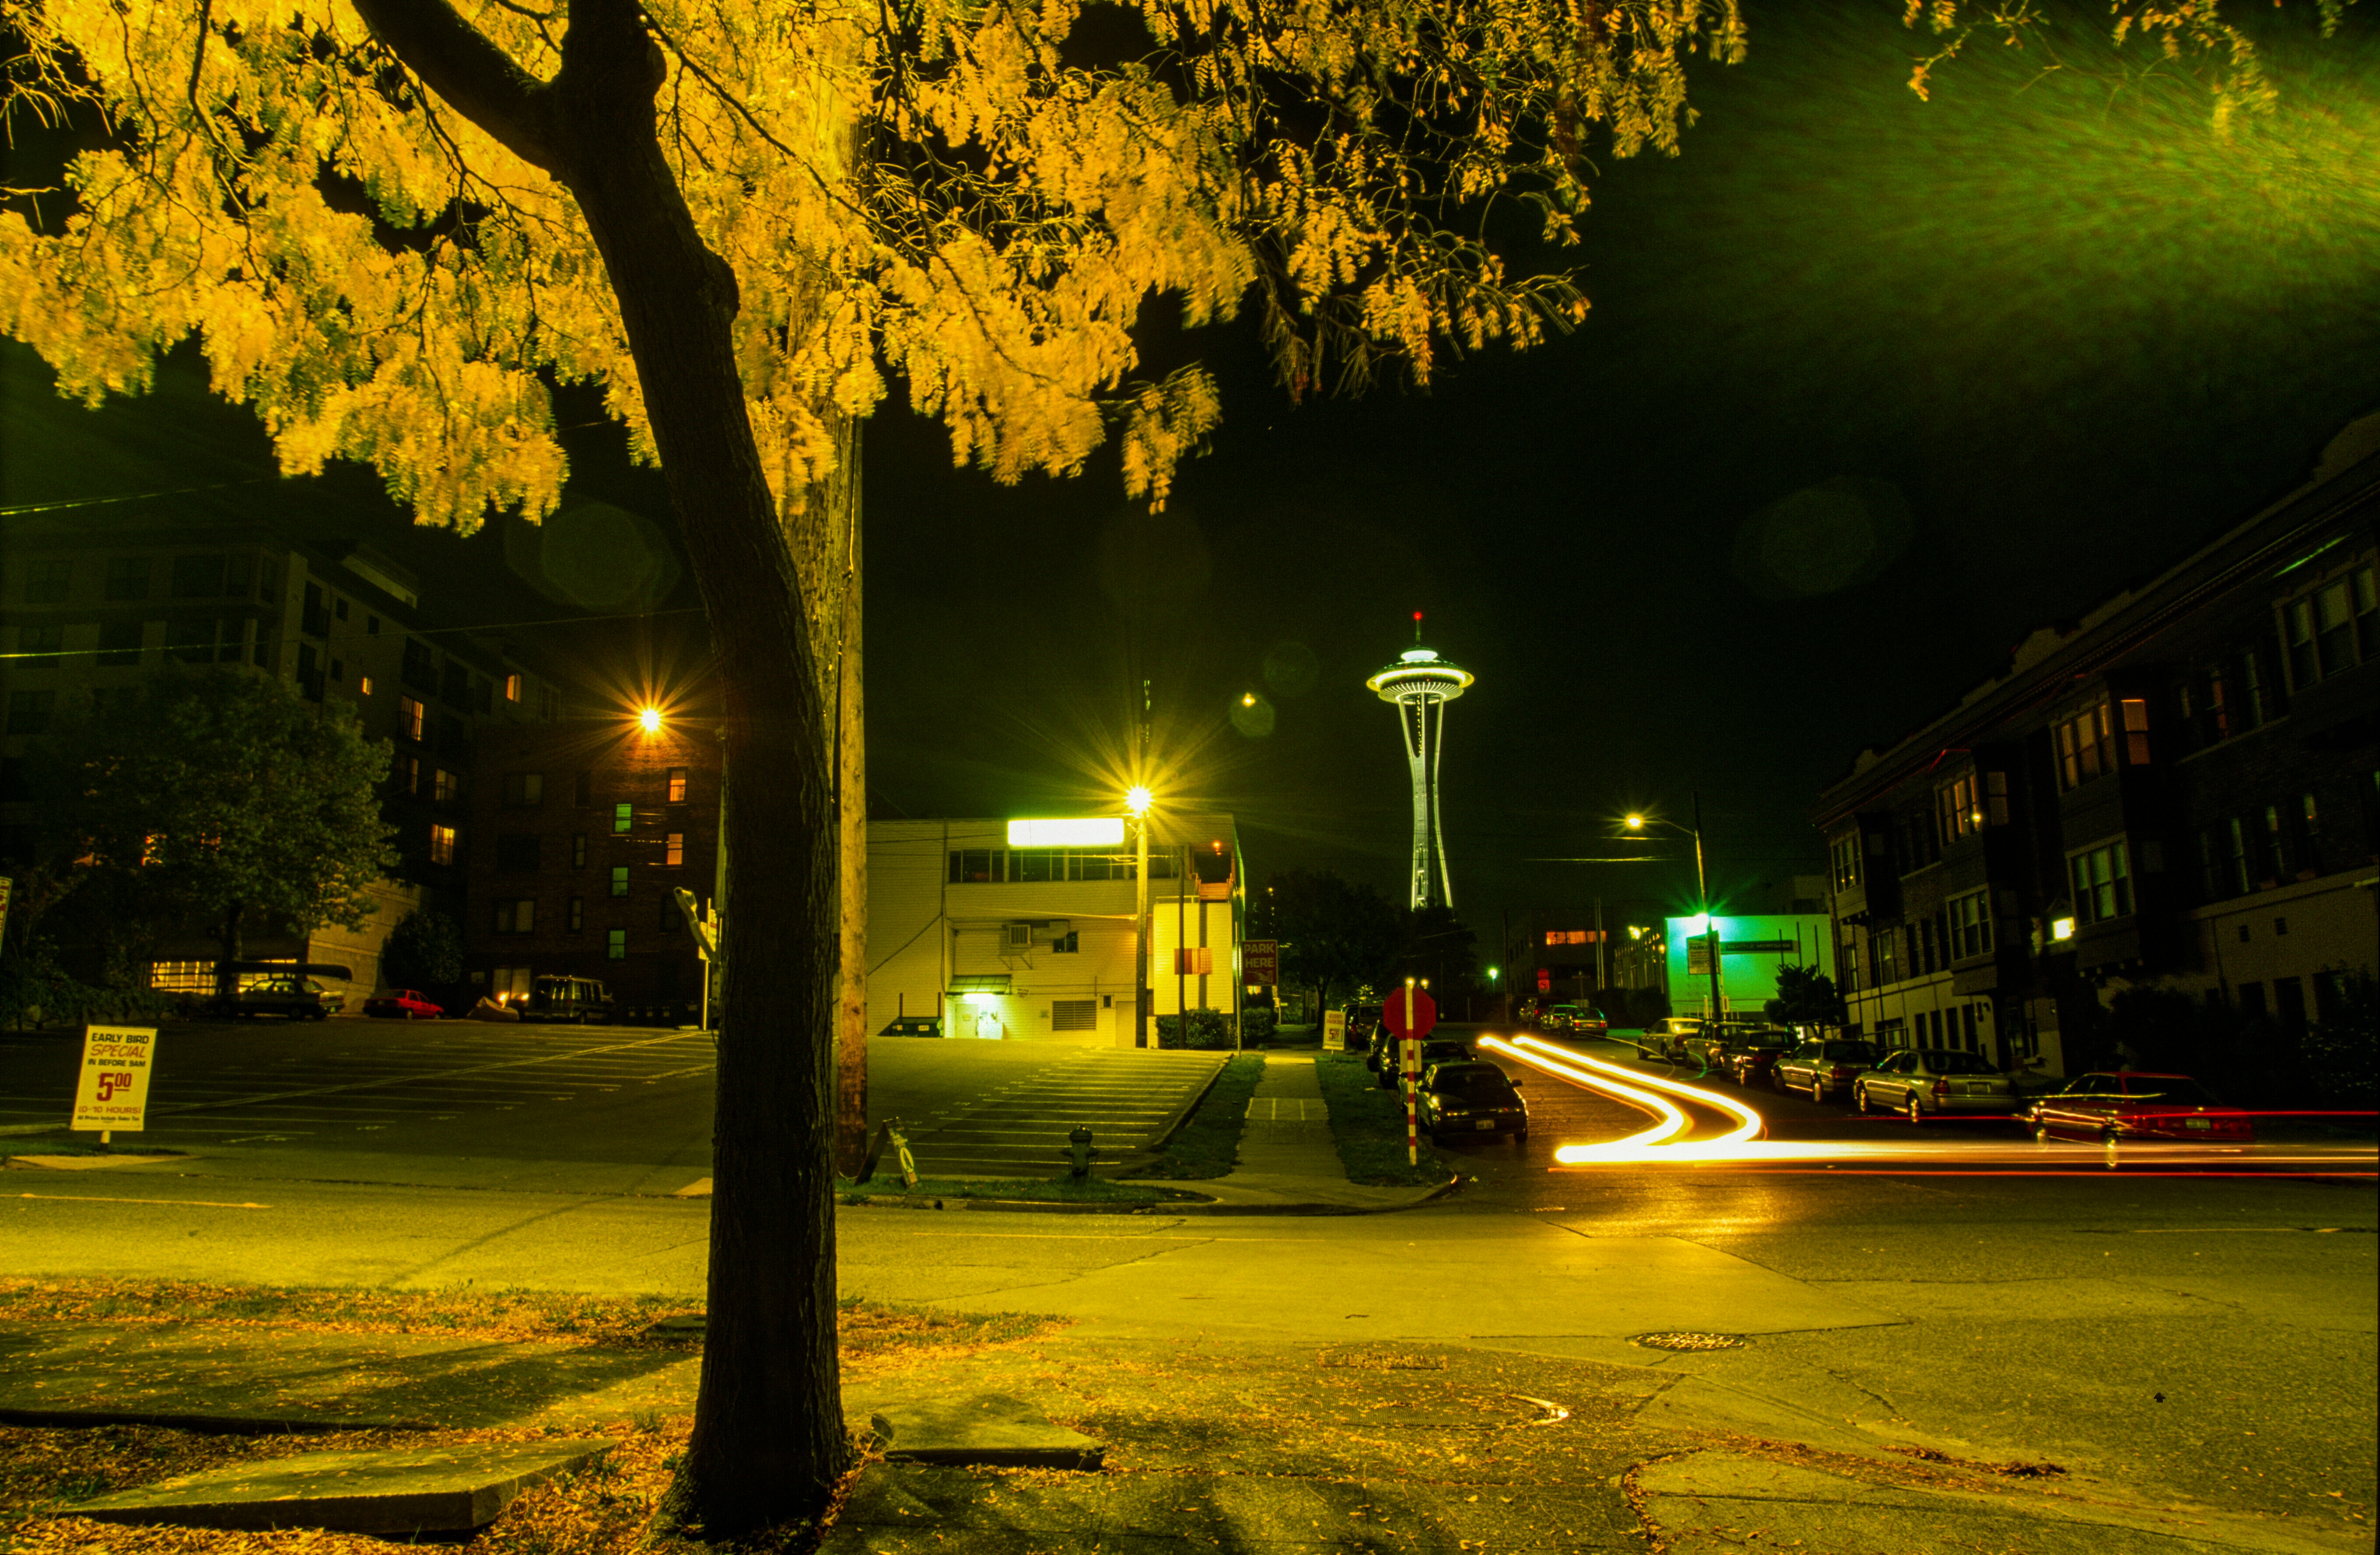 black street light near trees during night time